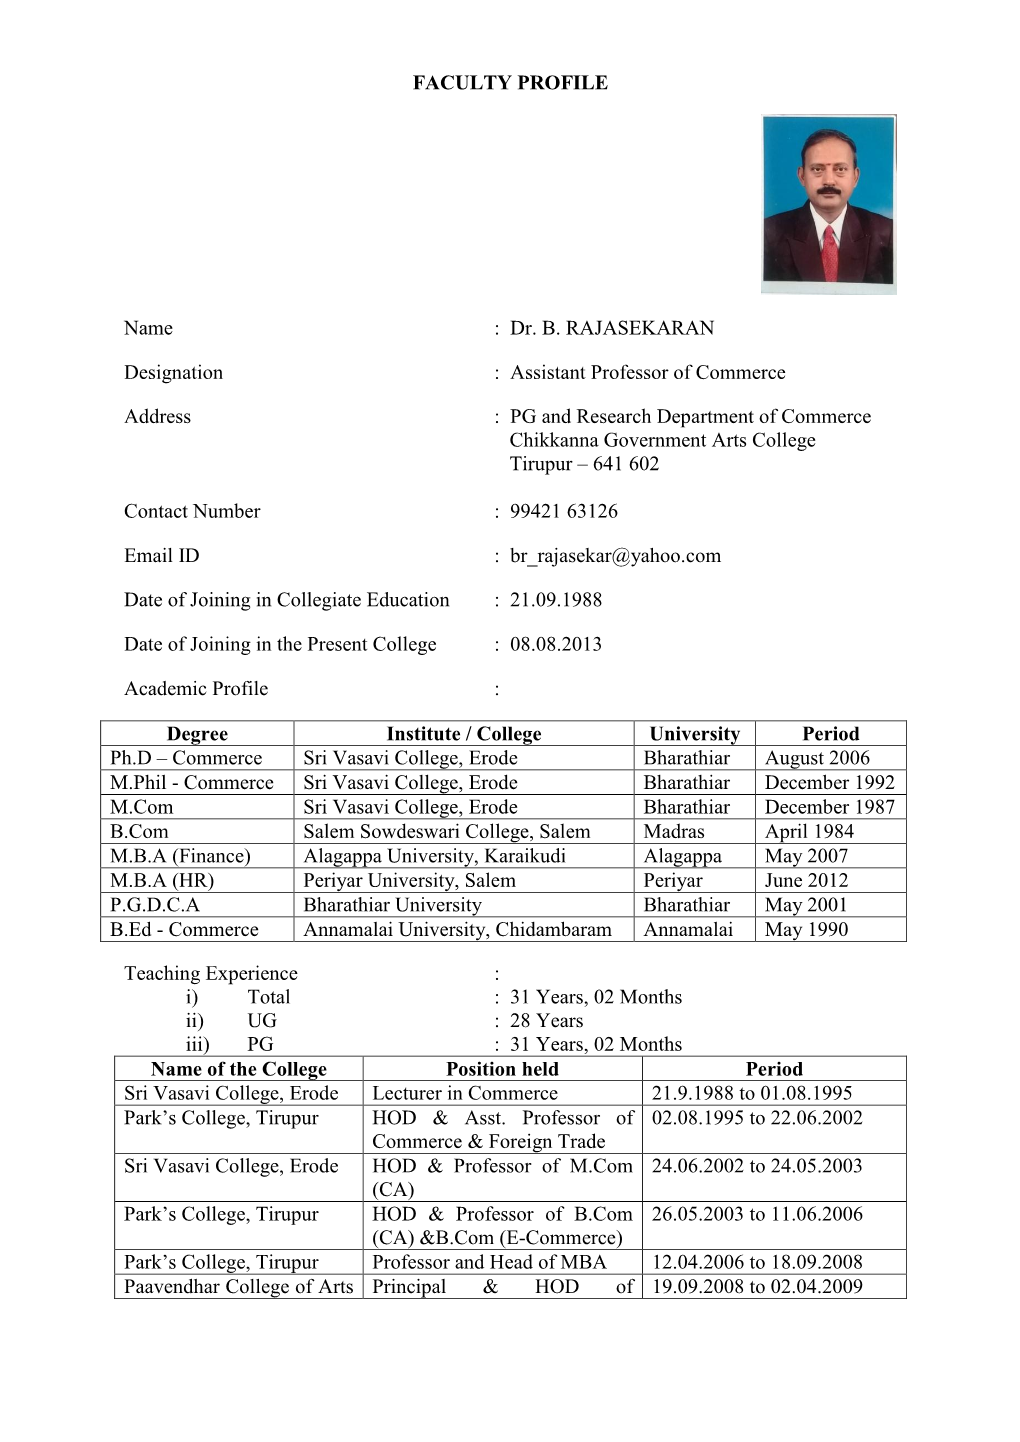 Dr. B. RAJASEKARAN Designation : Assistant Professor of Commerce